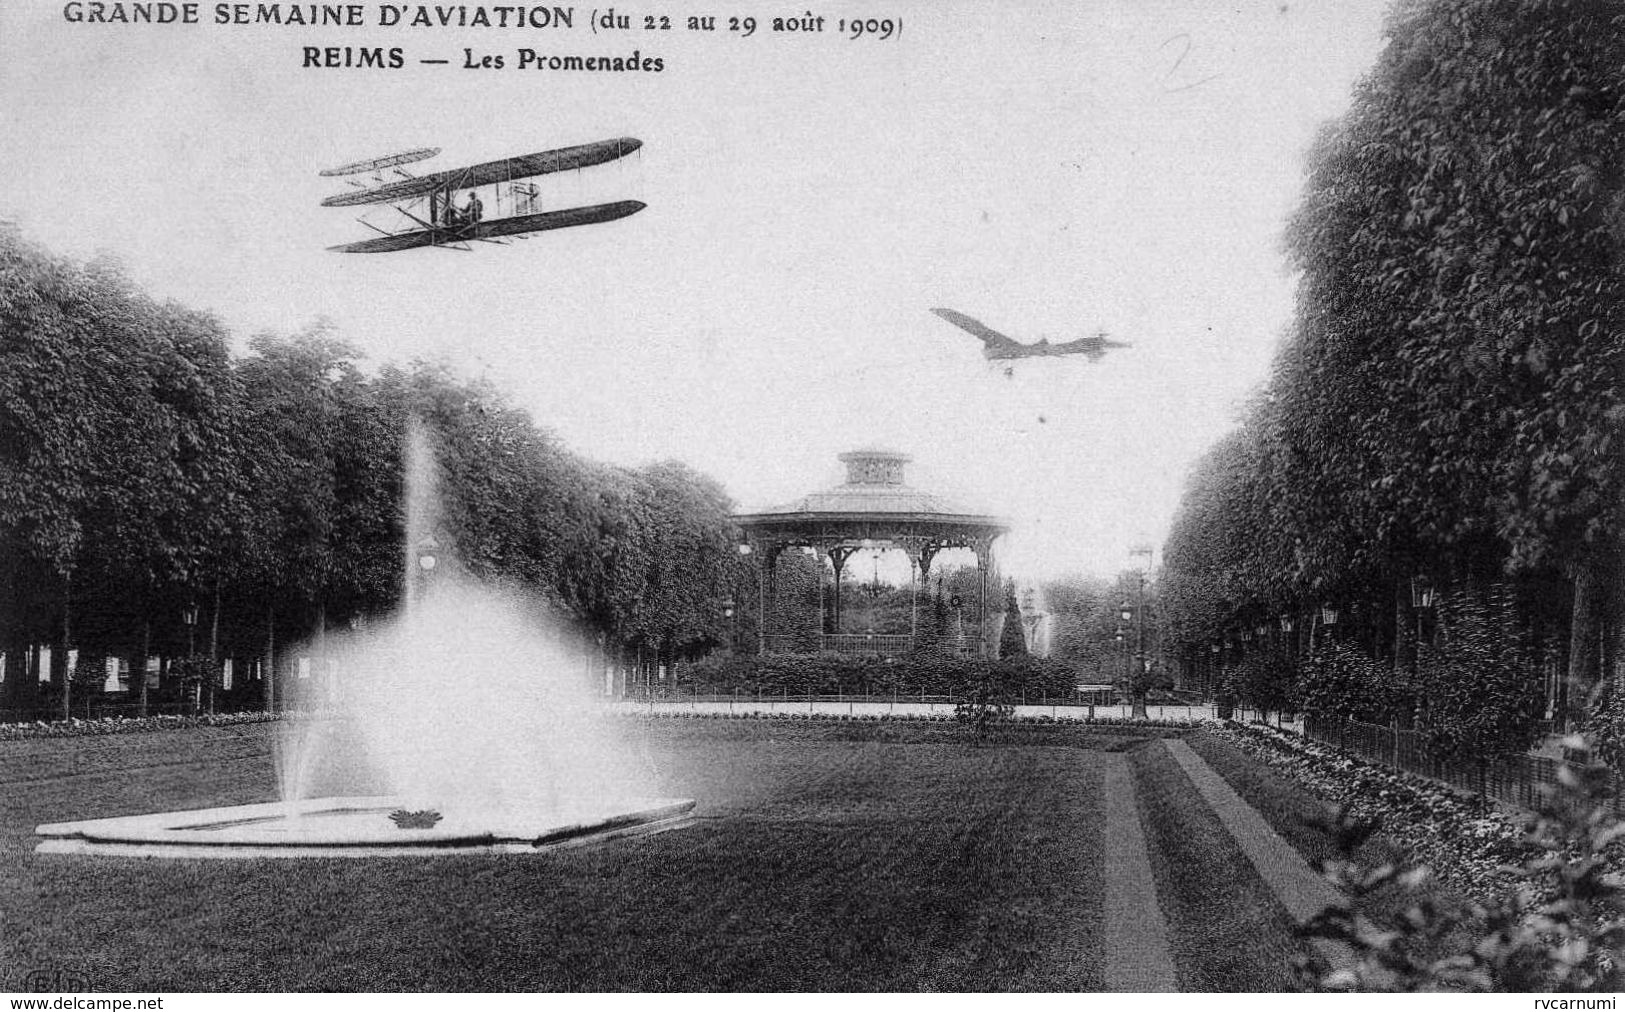 Grande Semaine D'Aviation De 1909: Les Promenades. - Reims